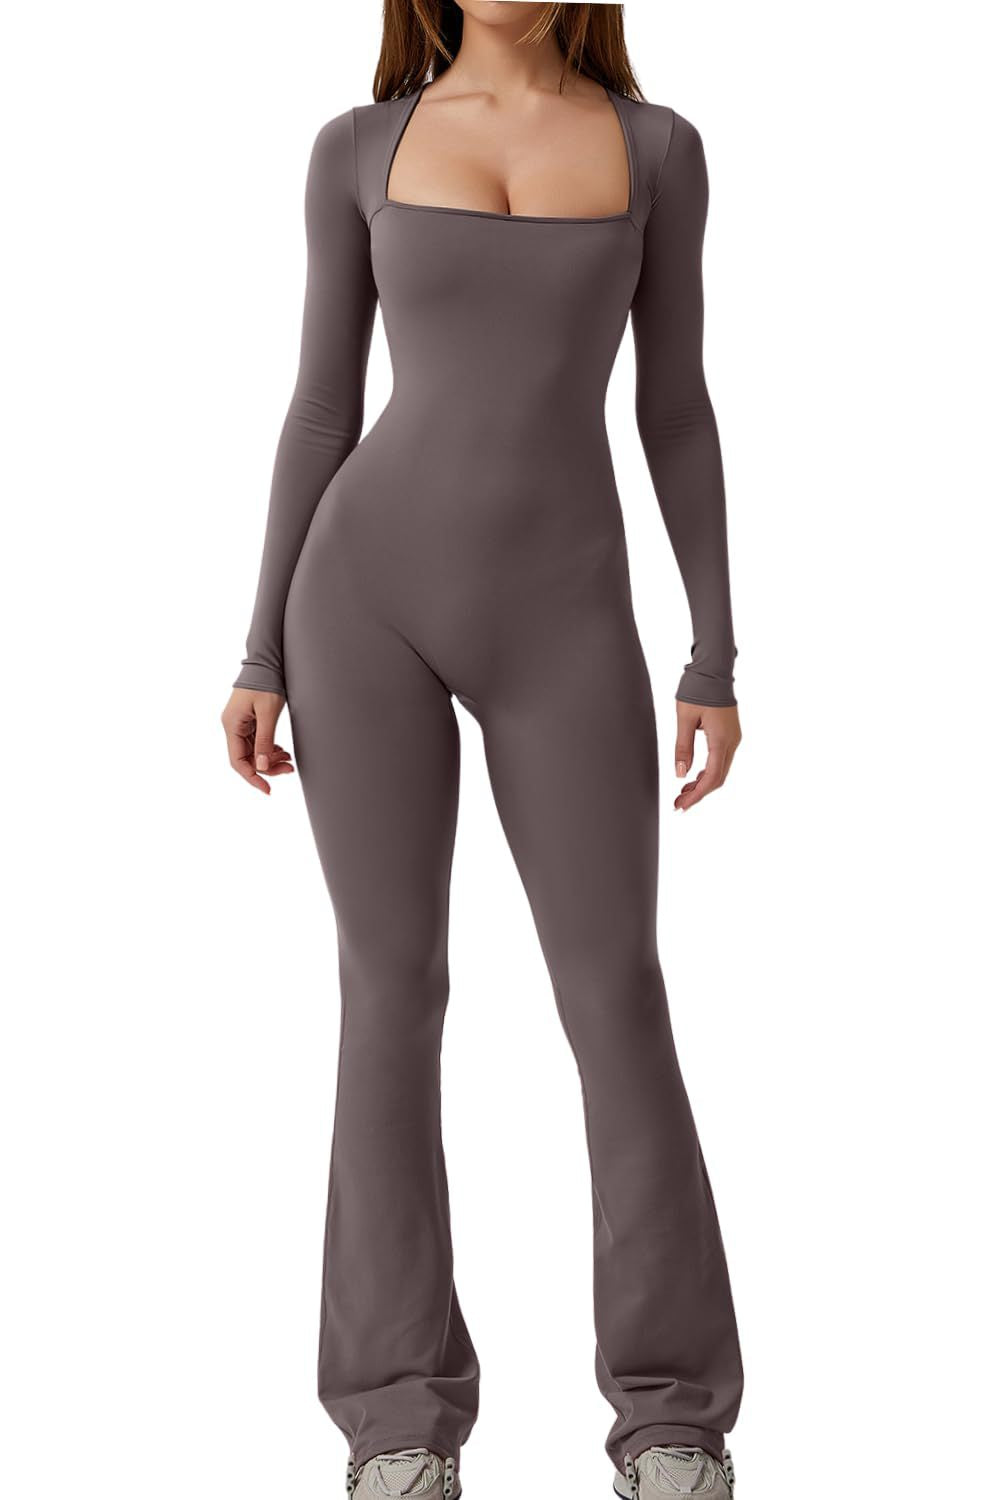 New Plus Size Spandex Long Sleeve Jumpsuit in Black - ShopperBoard